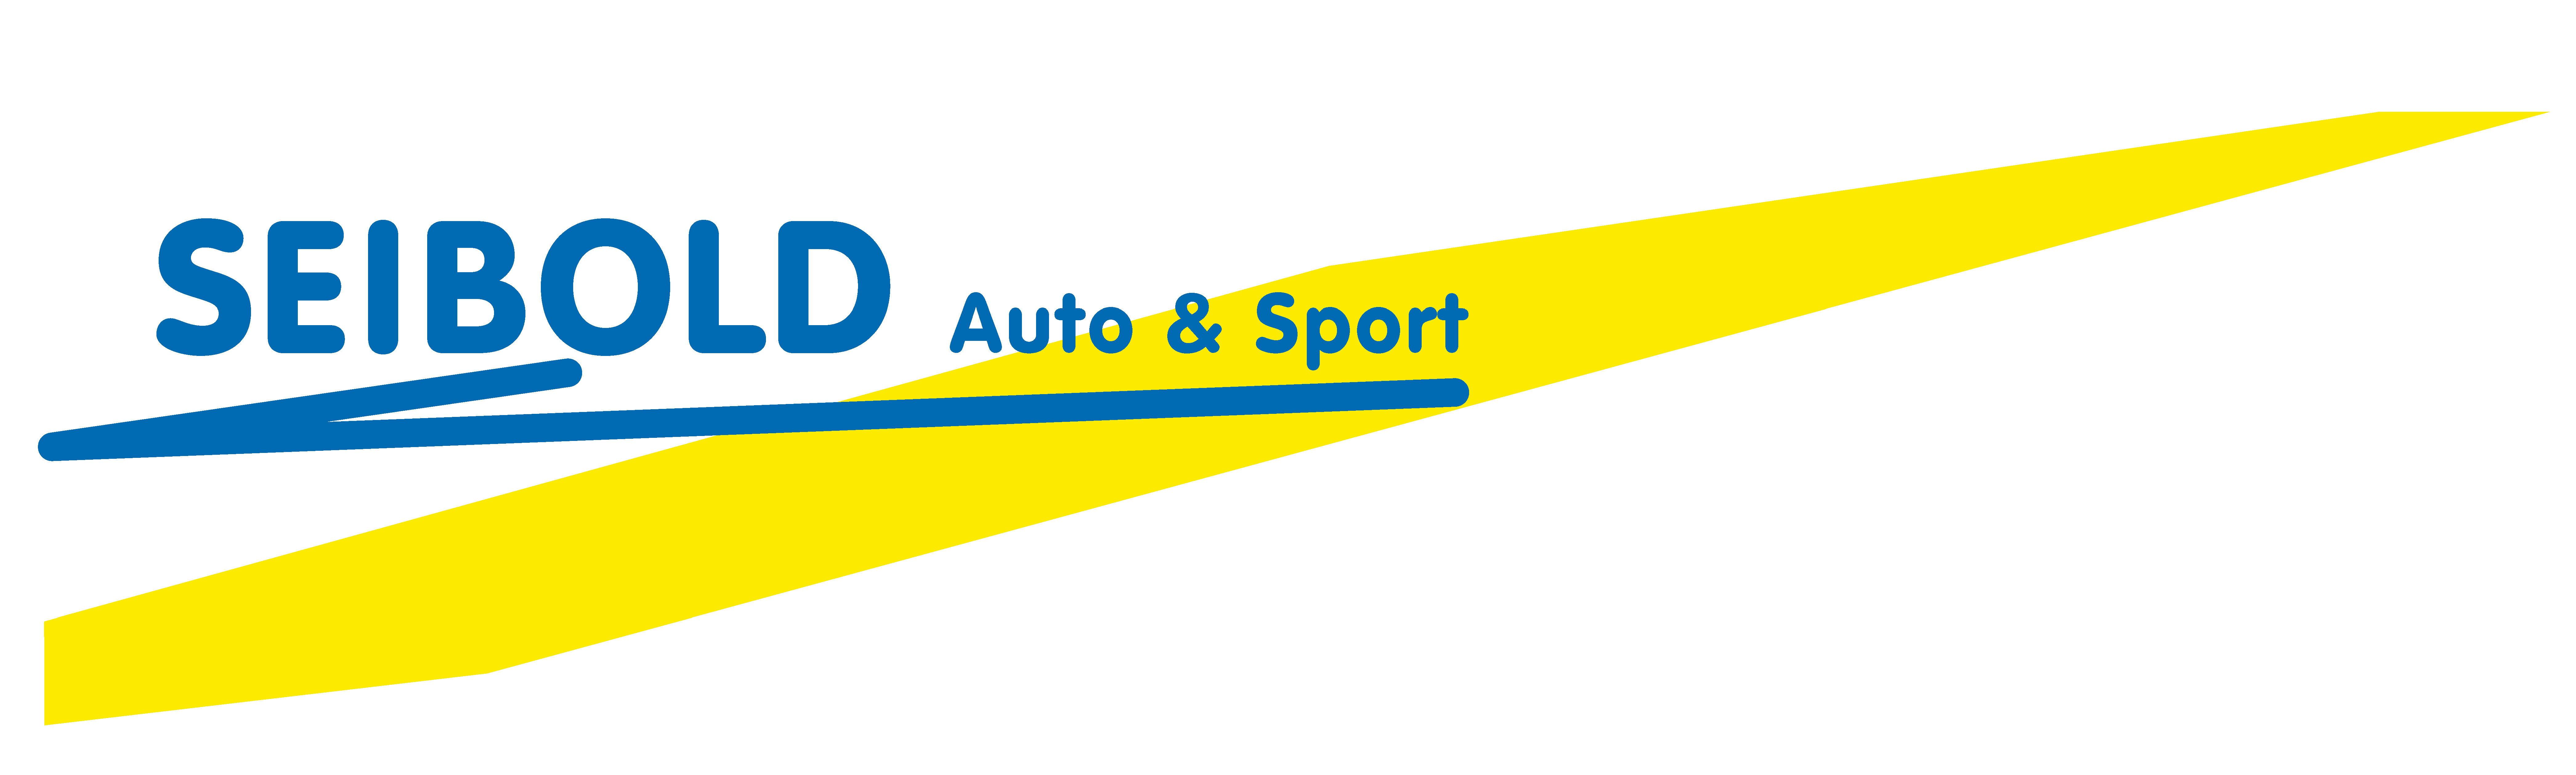 Seibold Auto & Sport